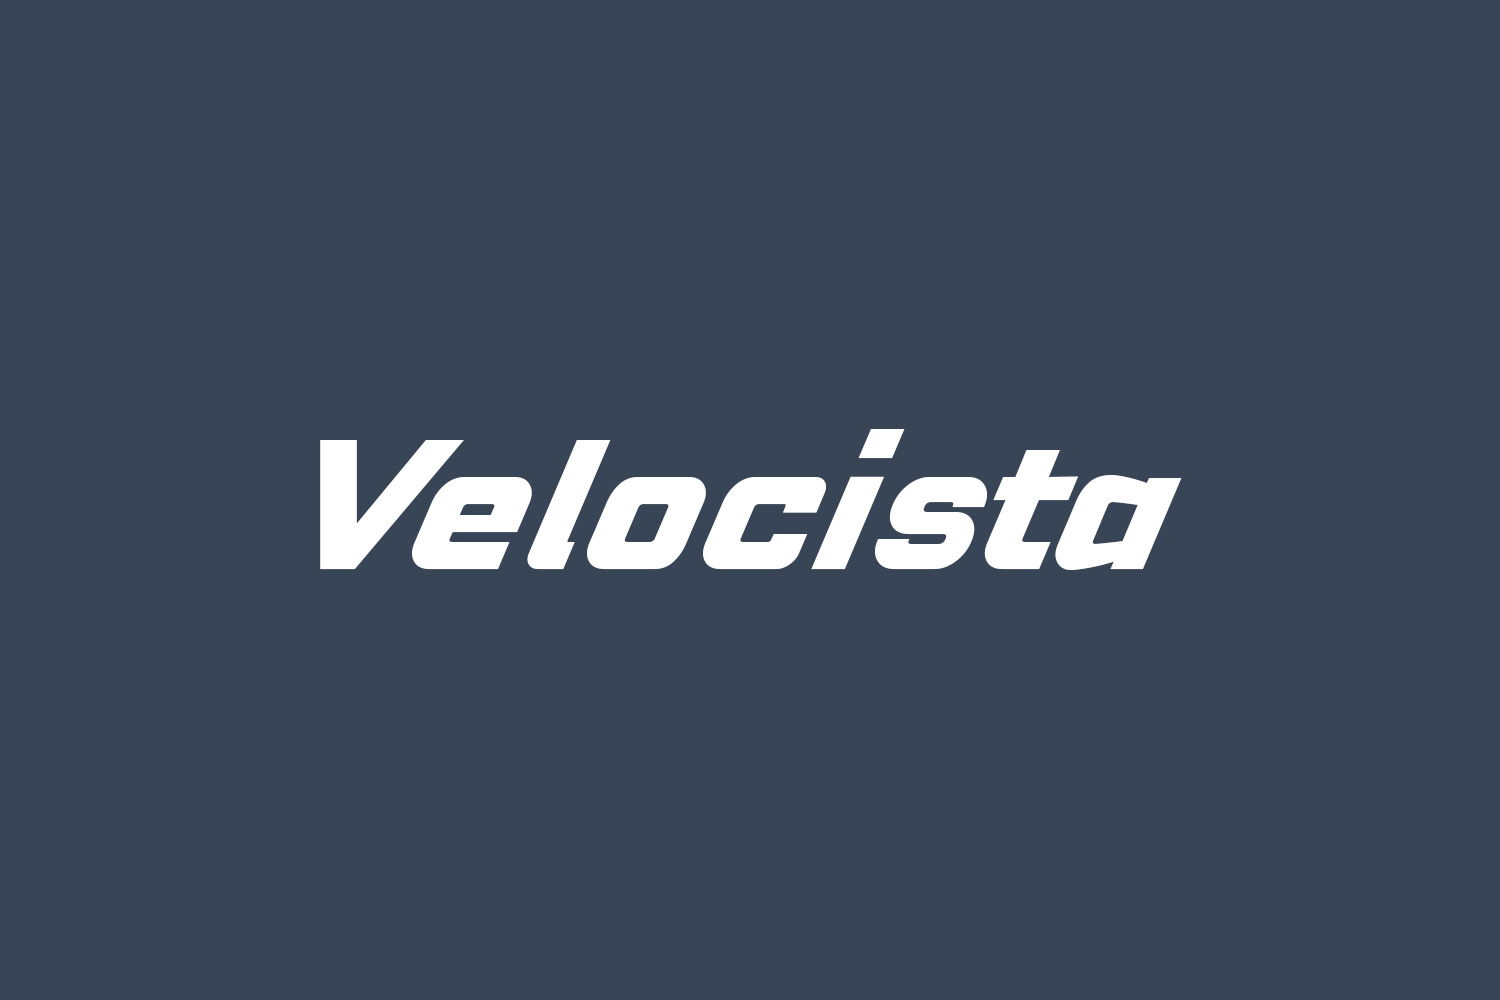 Velocista Free Font